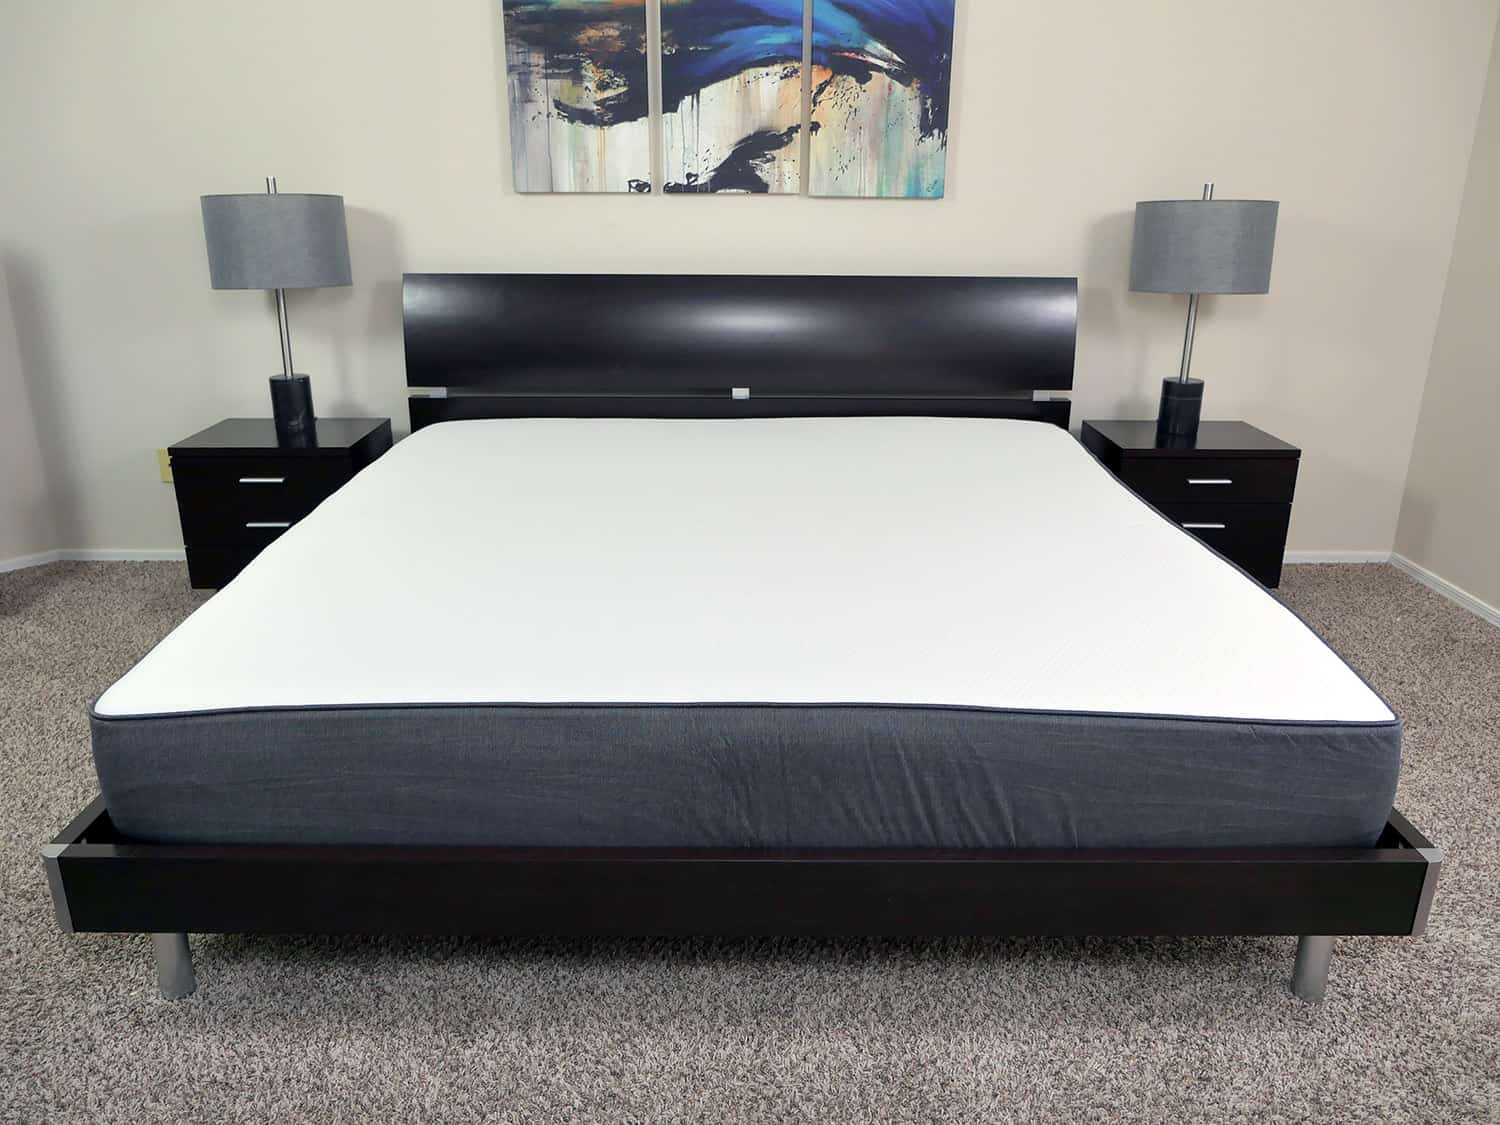 casper 6 inch mattress